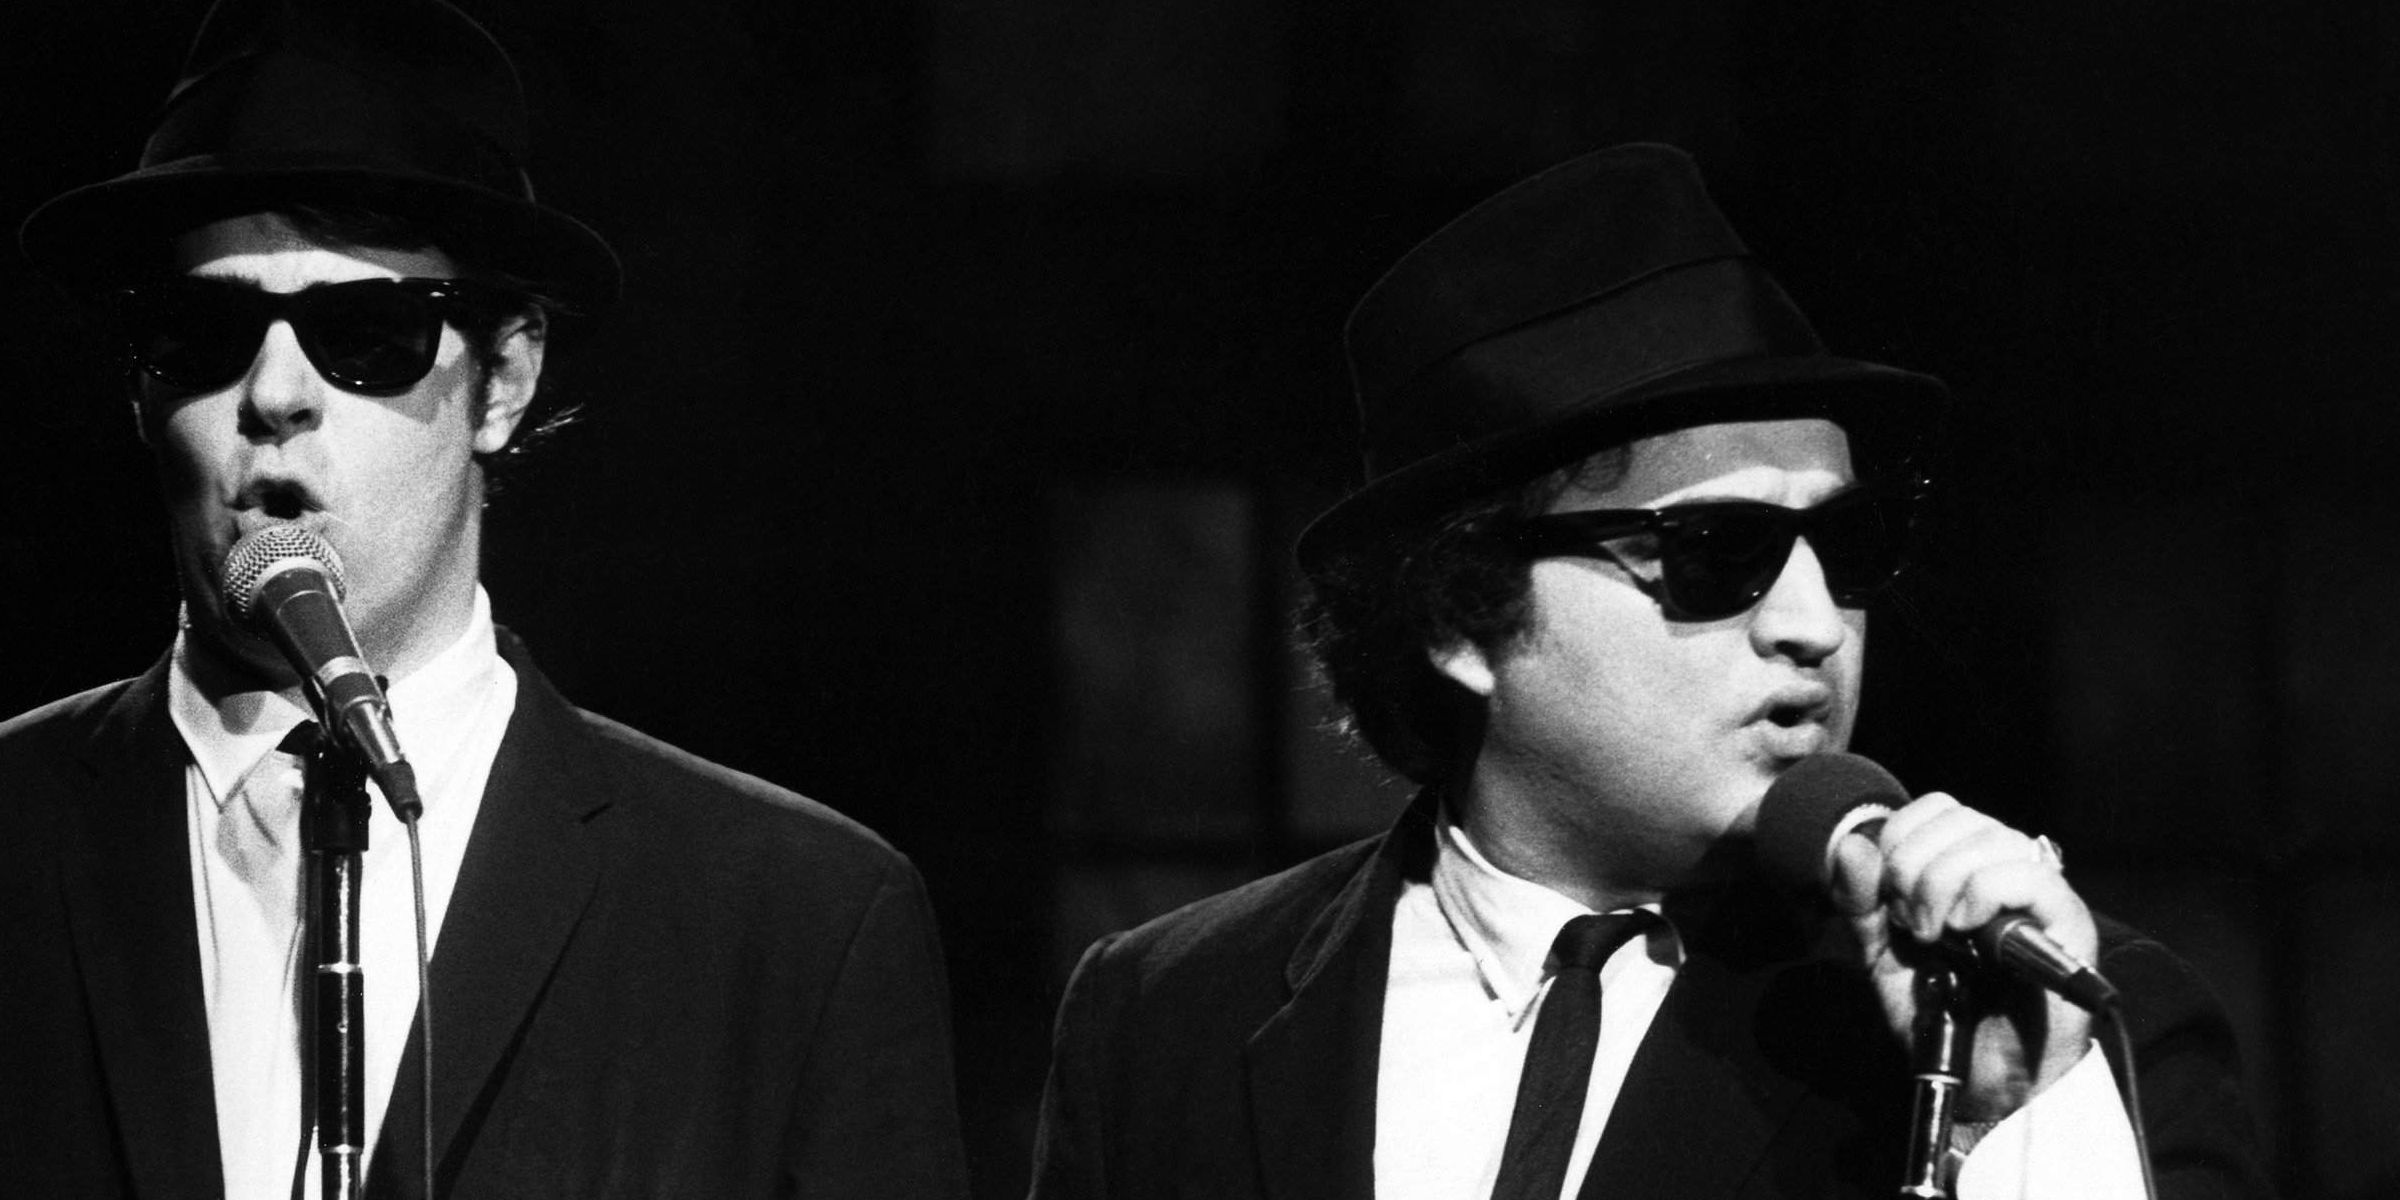 Dan Aykroyd and John Belushi as The Blues Brothers on Saturday Night Live.